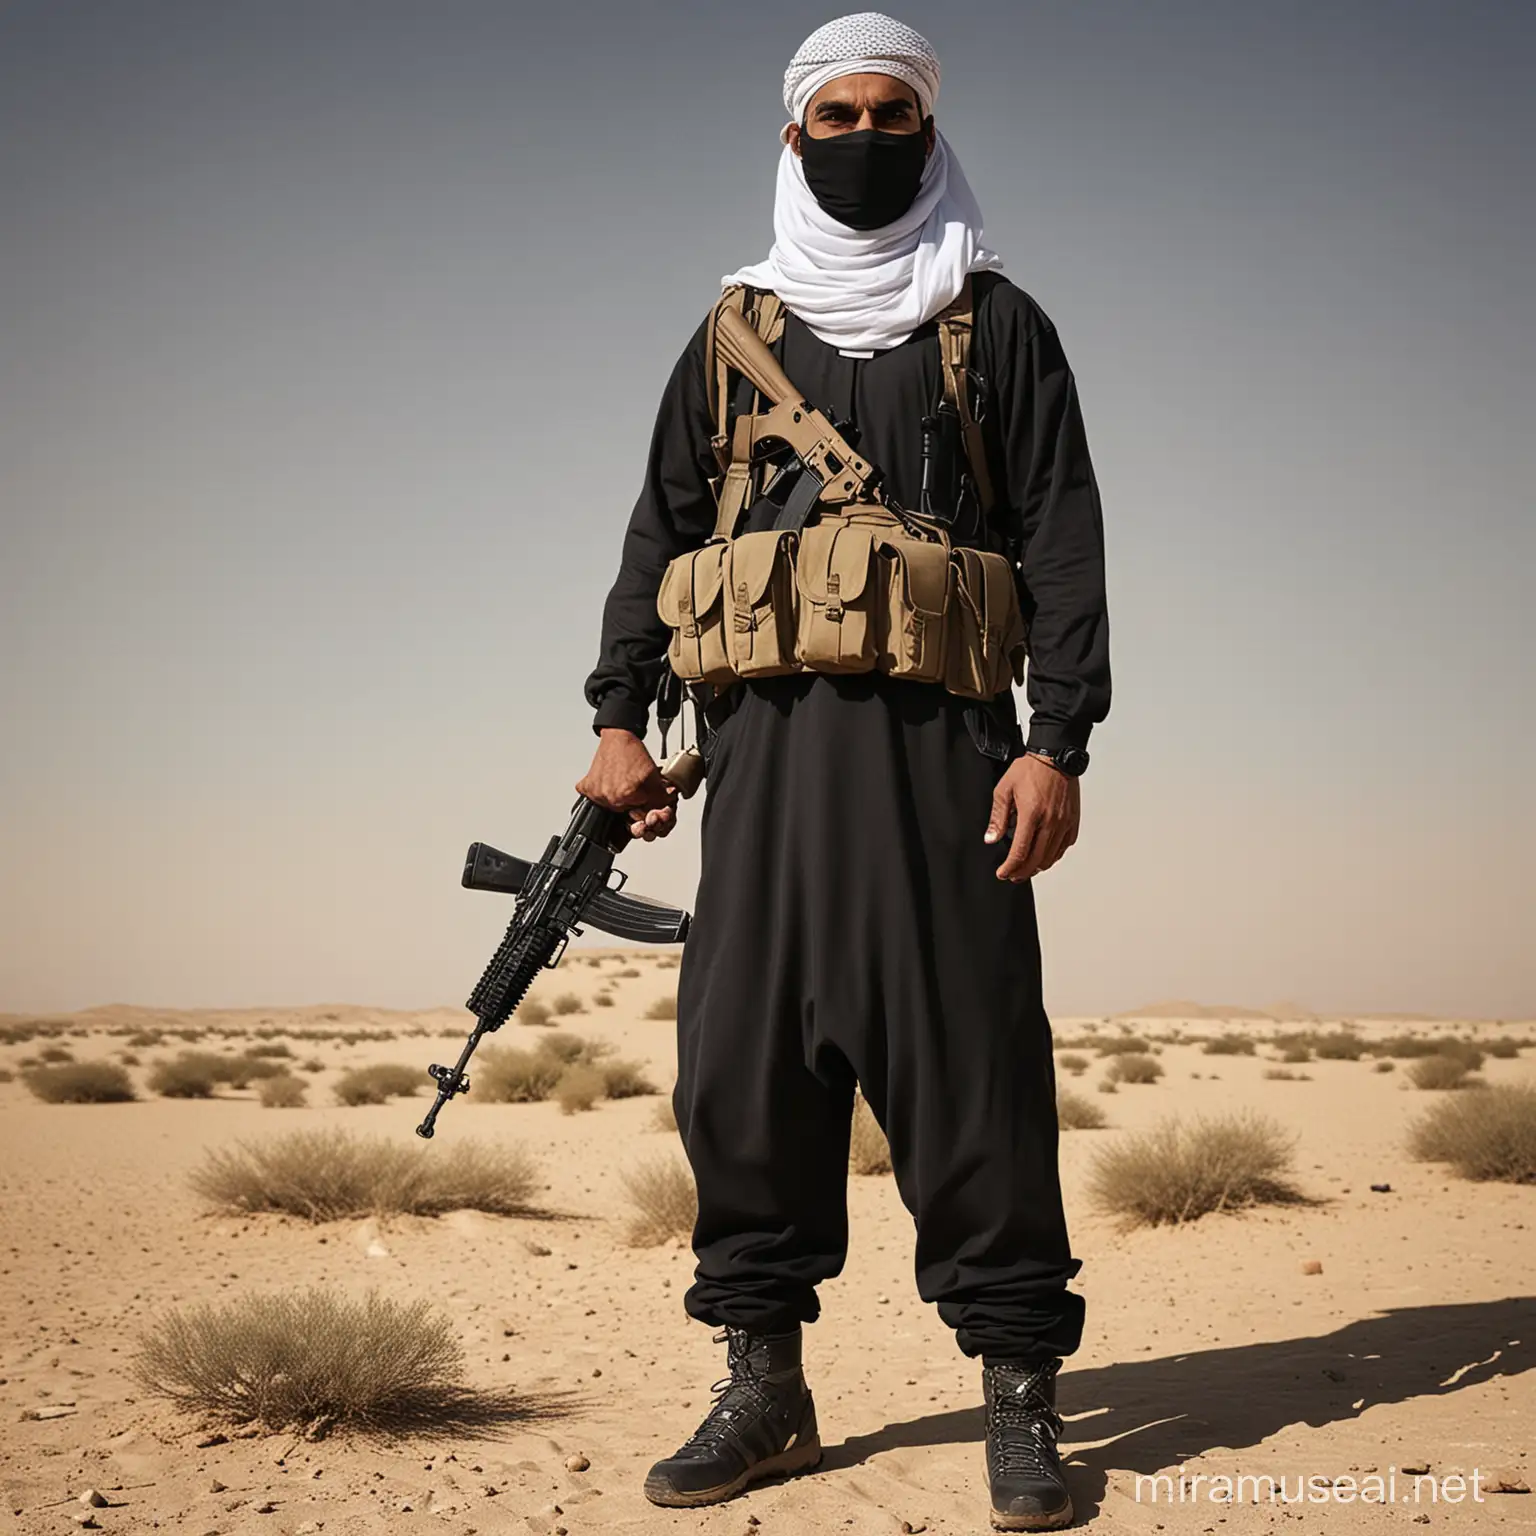 muslim terrorist outfitt
